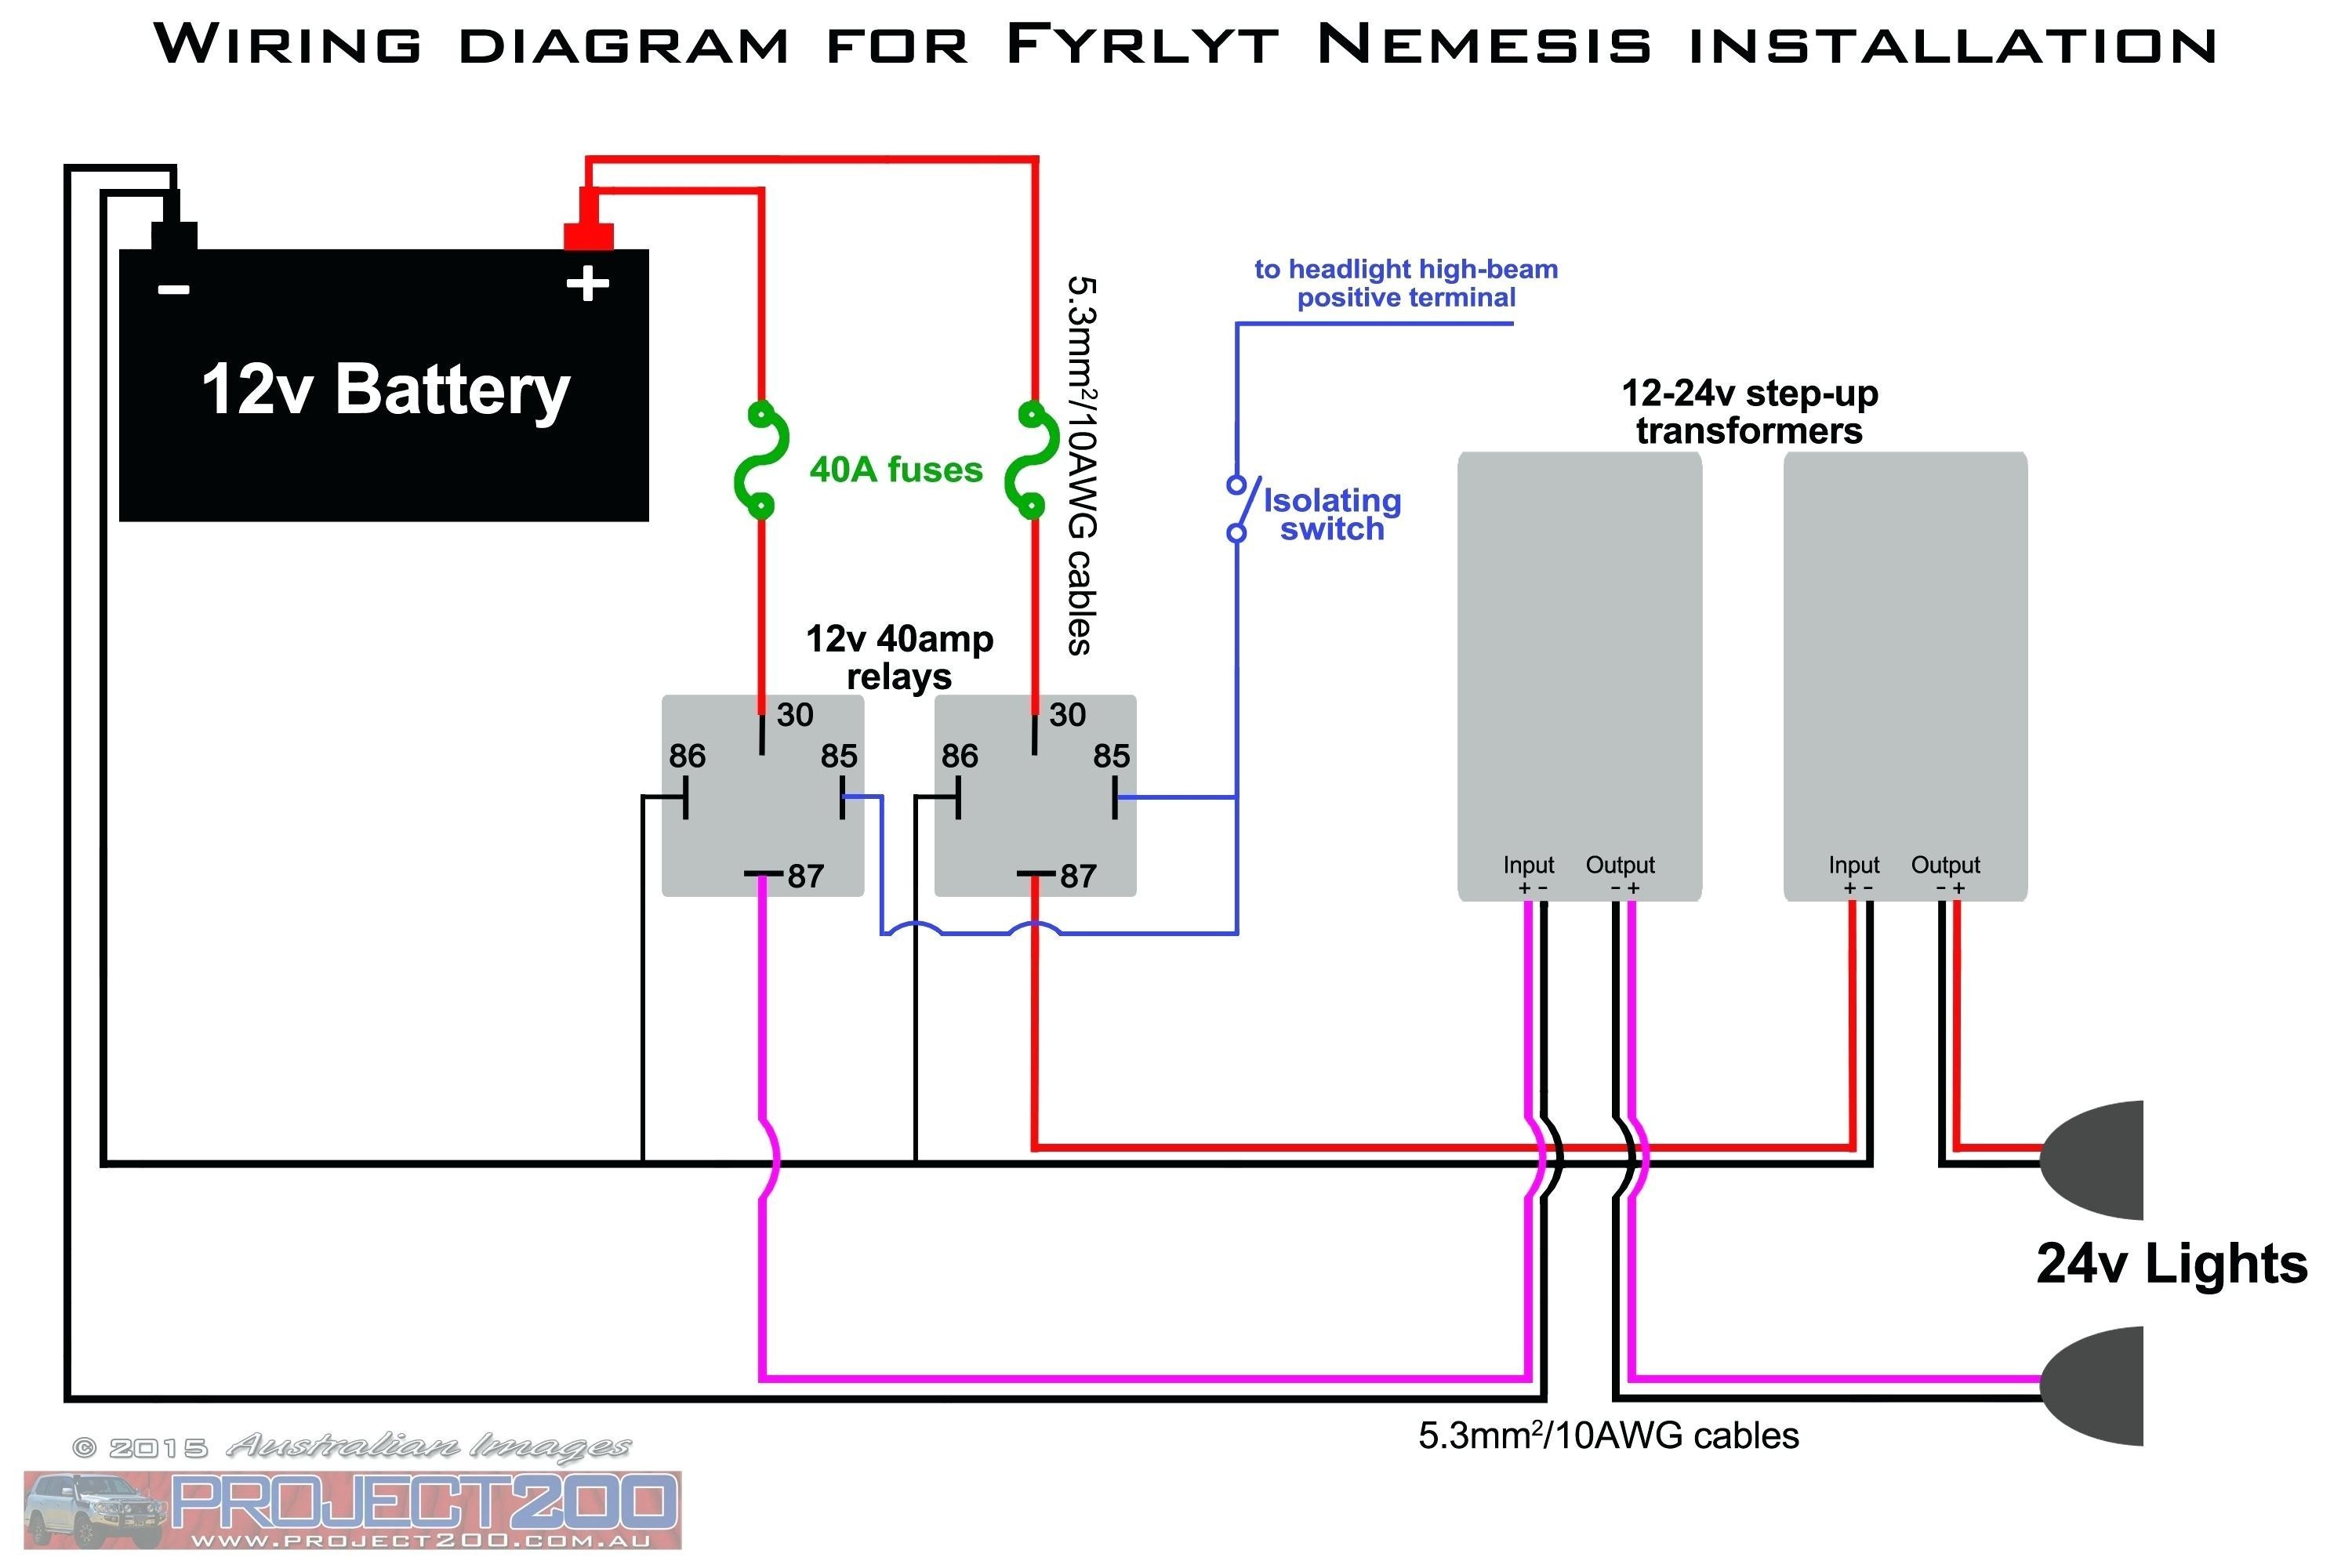 40 Amp Relay Diagram Best Wiring Diagram for 40 Amp Relay Save Wiring Diagram for